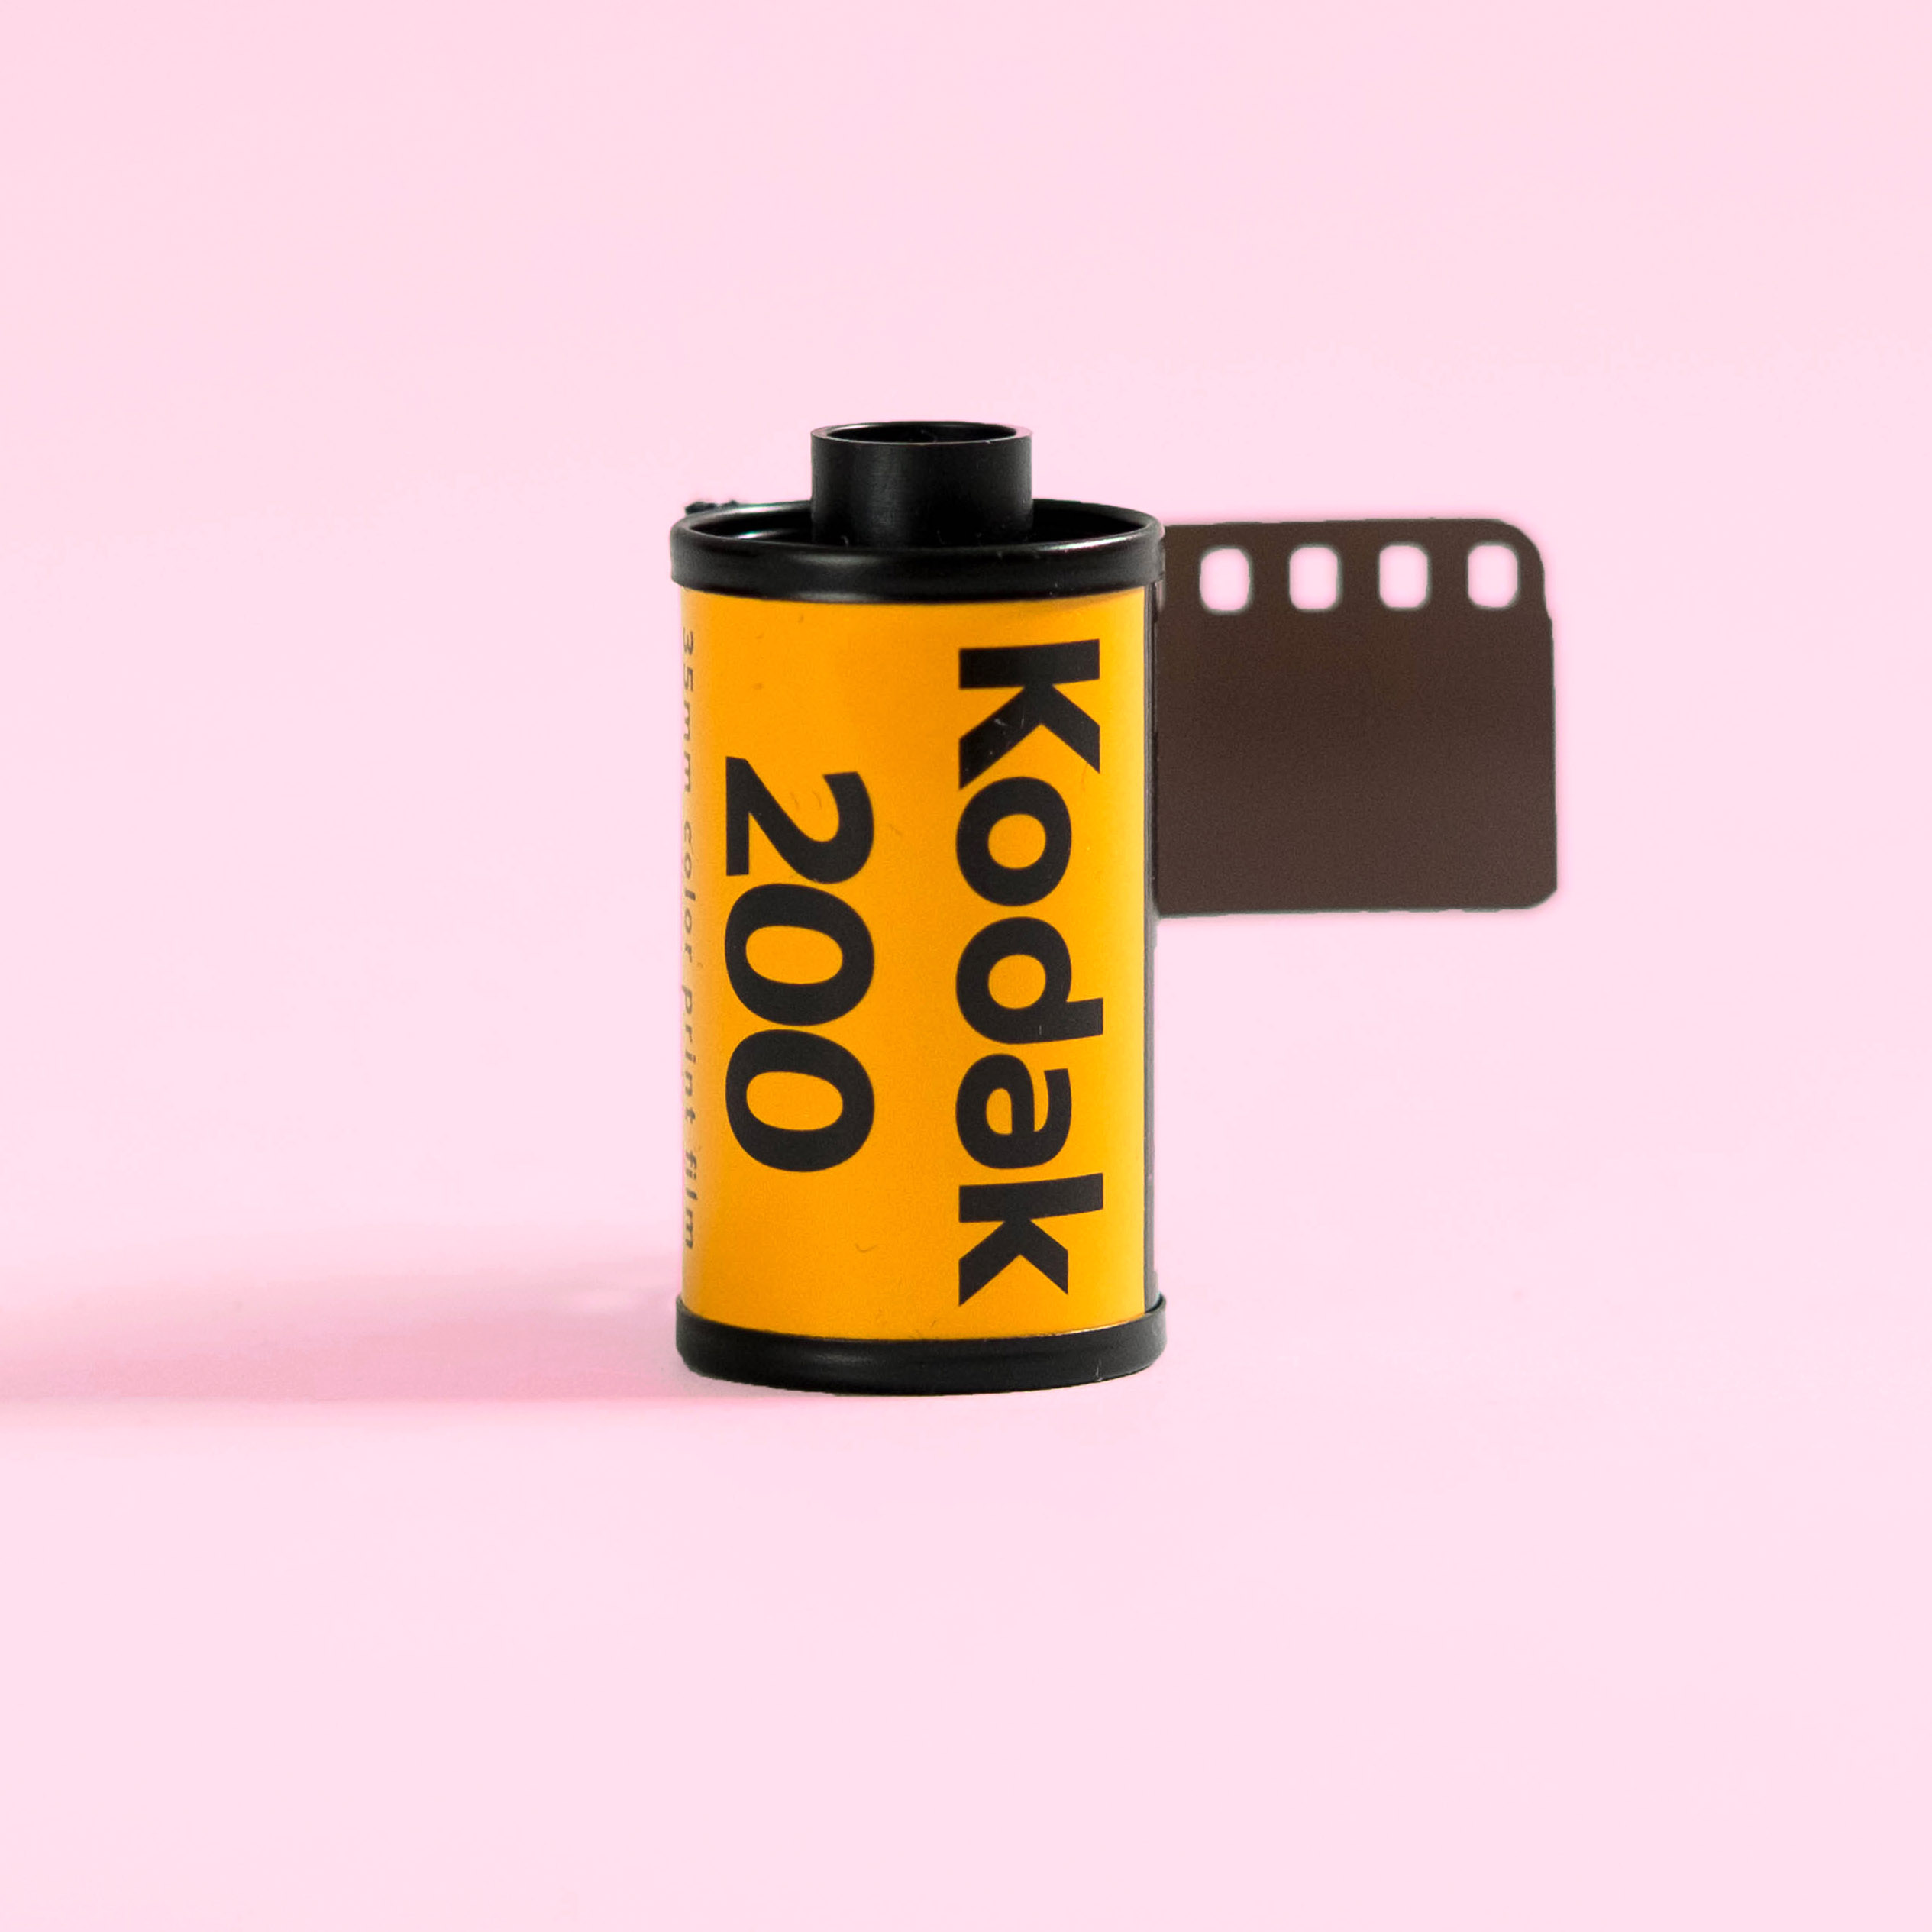 Kodak Gold 200 35mm Film - Buy Classic Colour Film